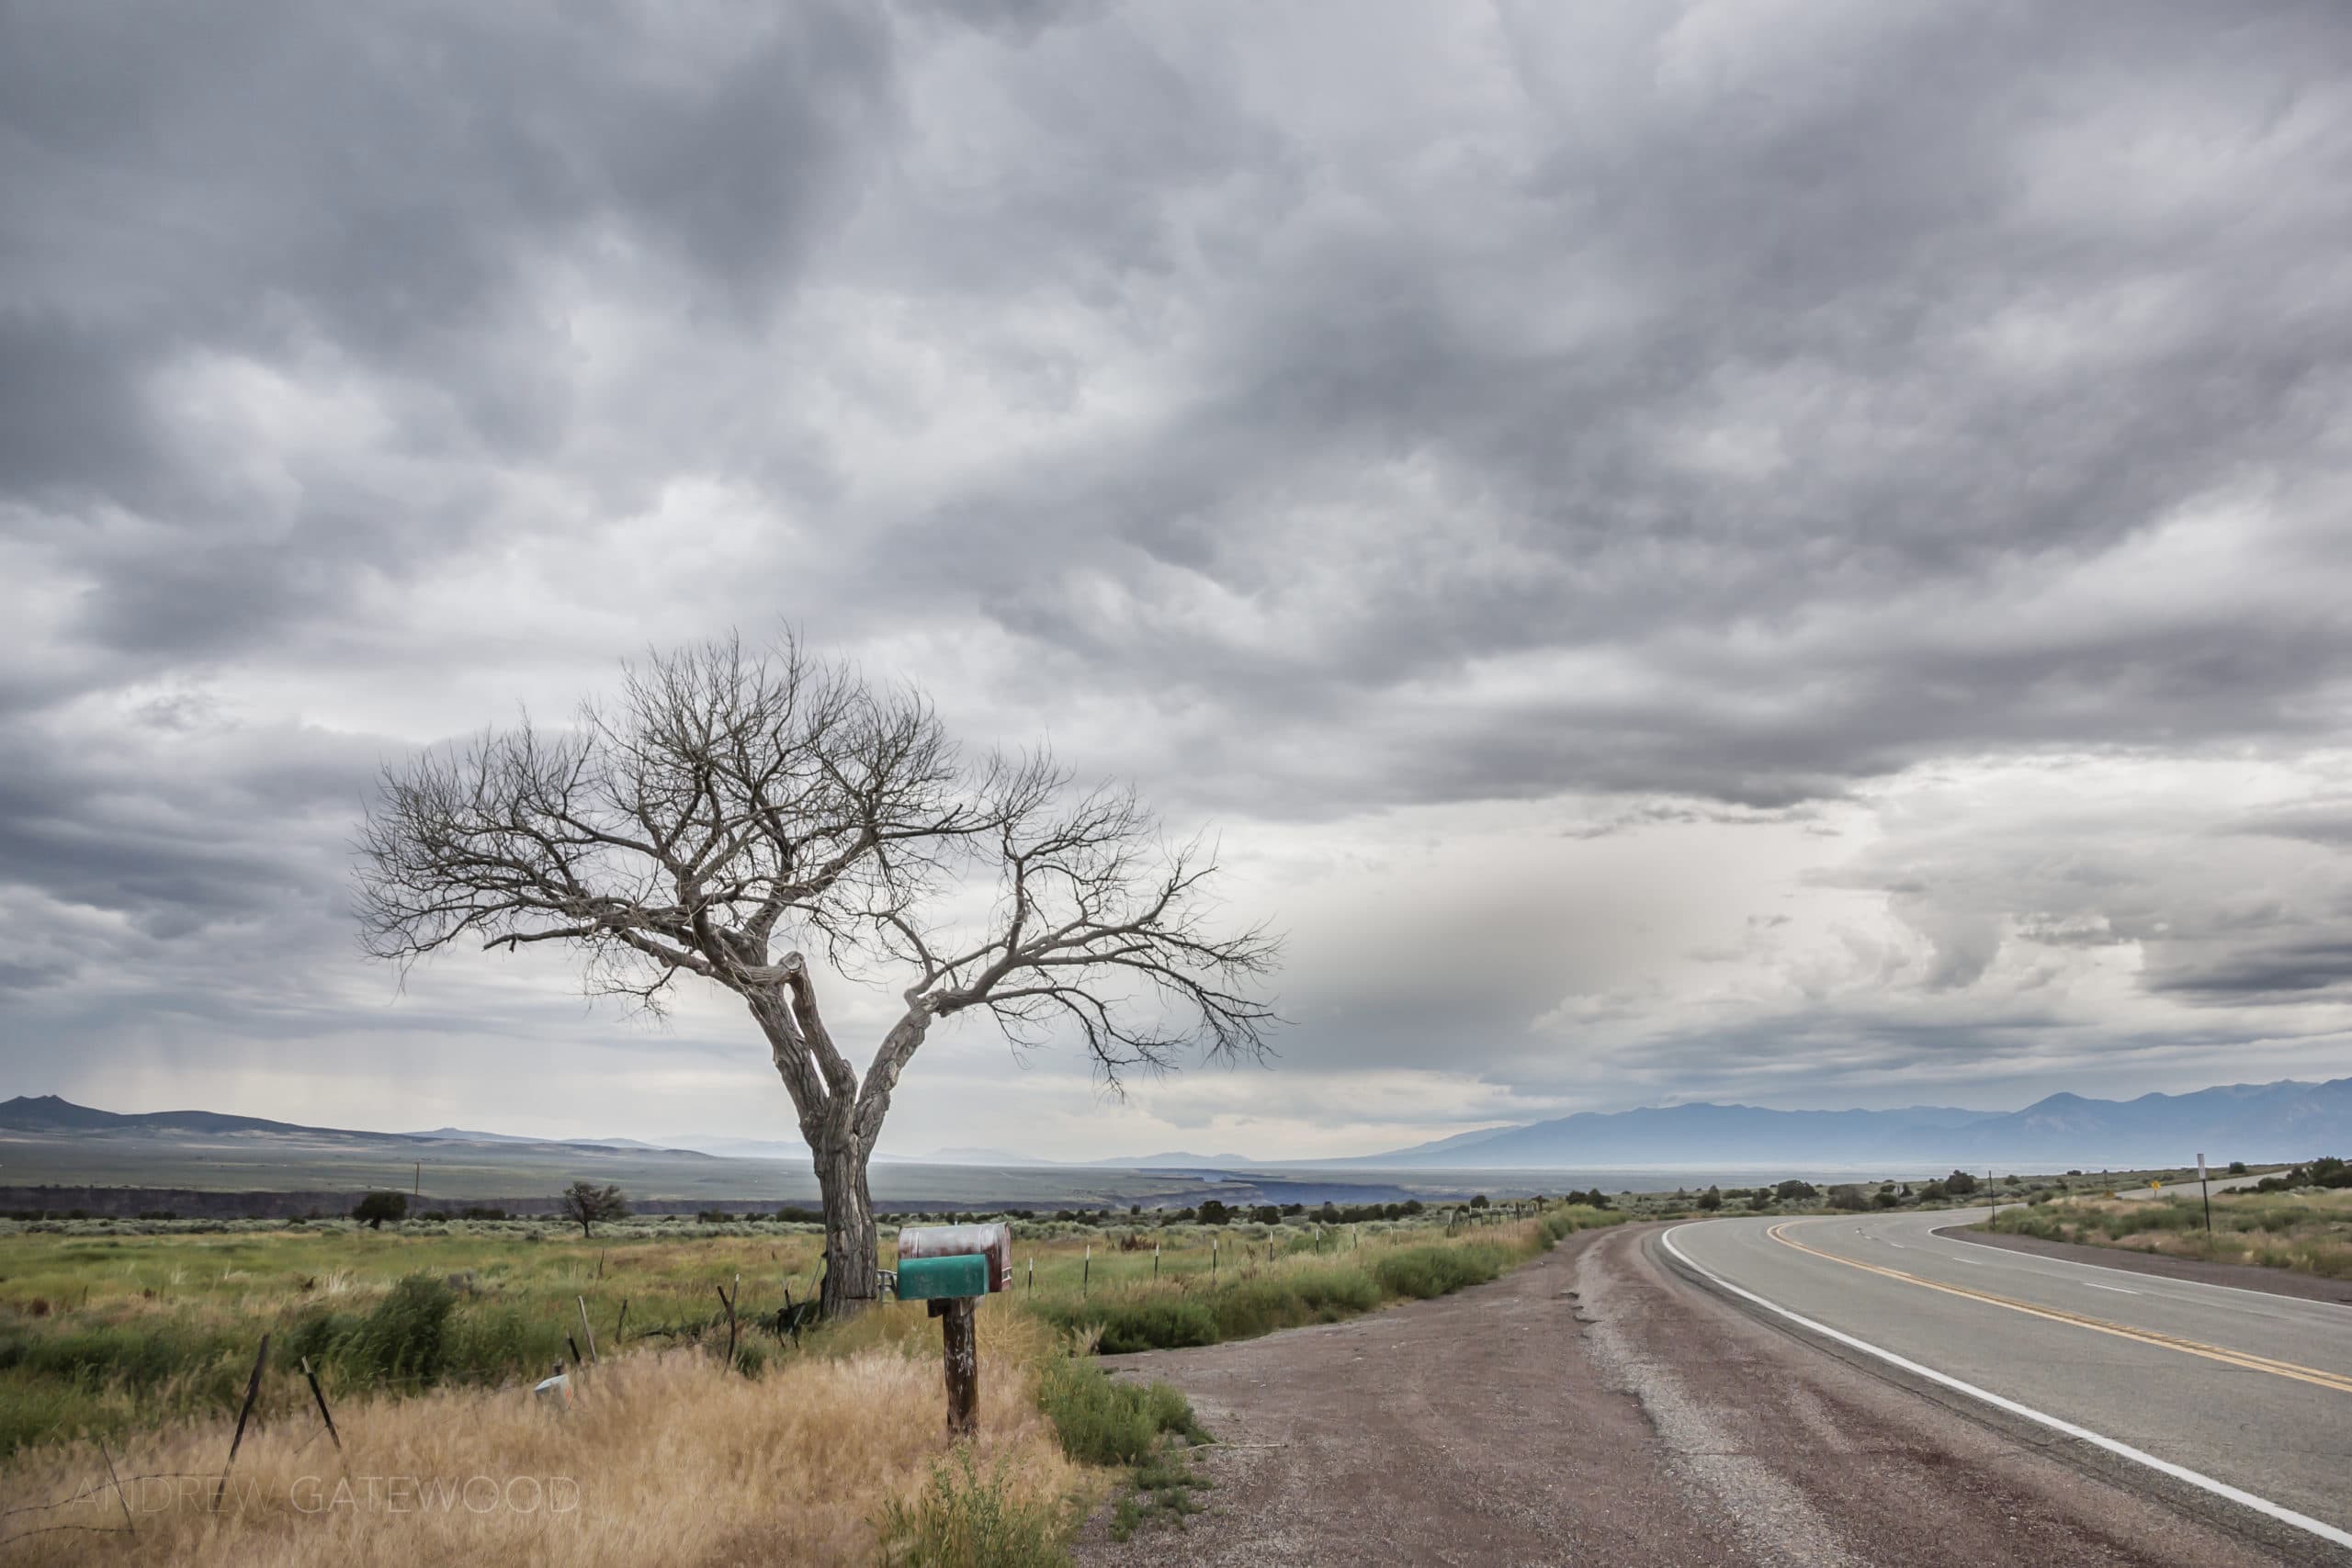 Stormy Taos Tree. Taos, New Mexico. ©AndrewGatewood